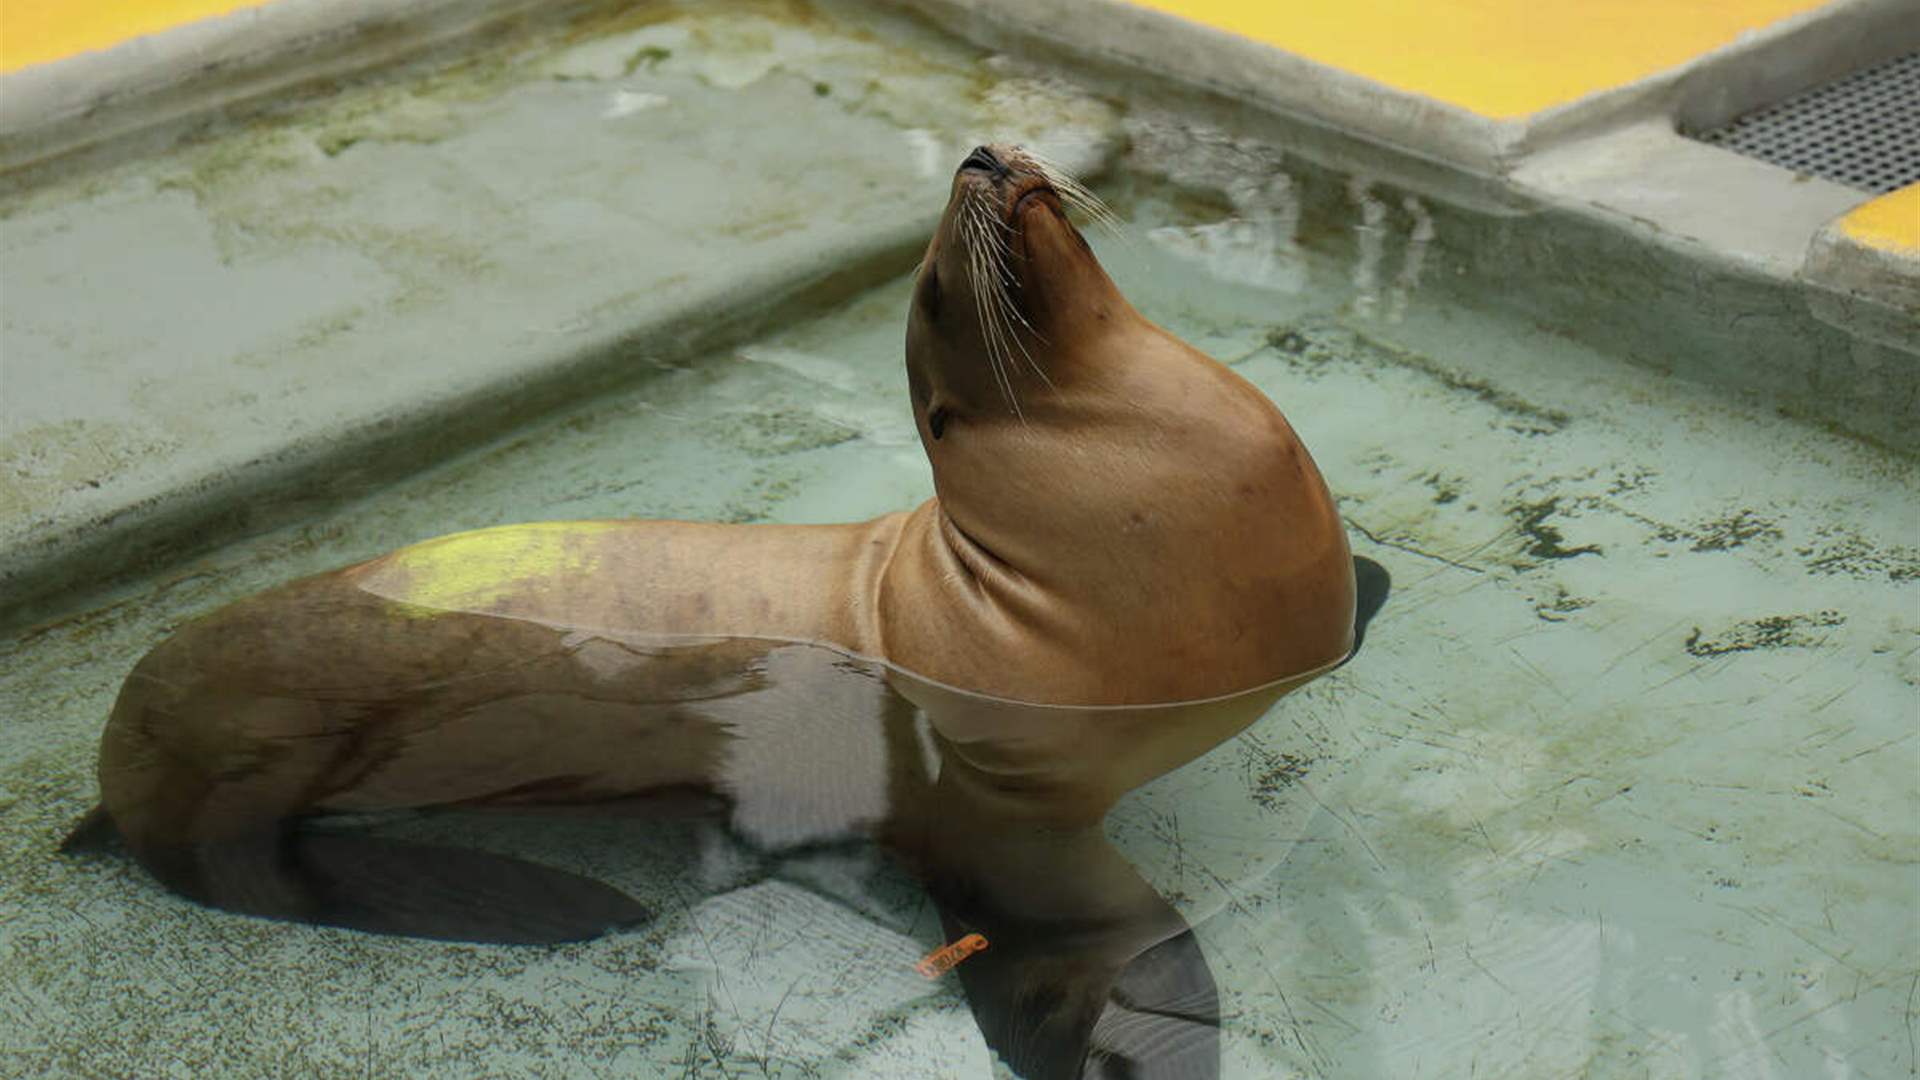 Unprecedented deaths of marine mammals on California coast raises concerns